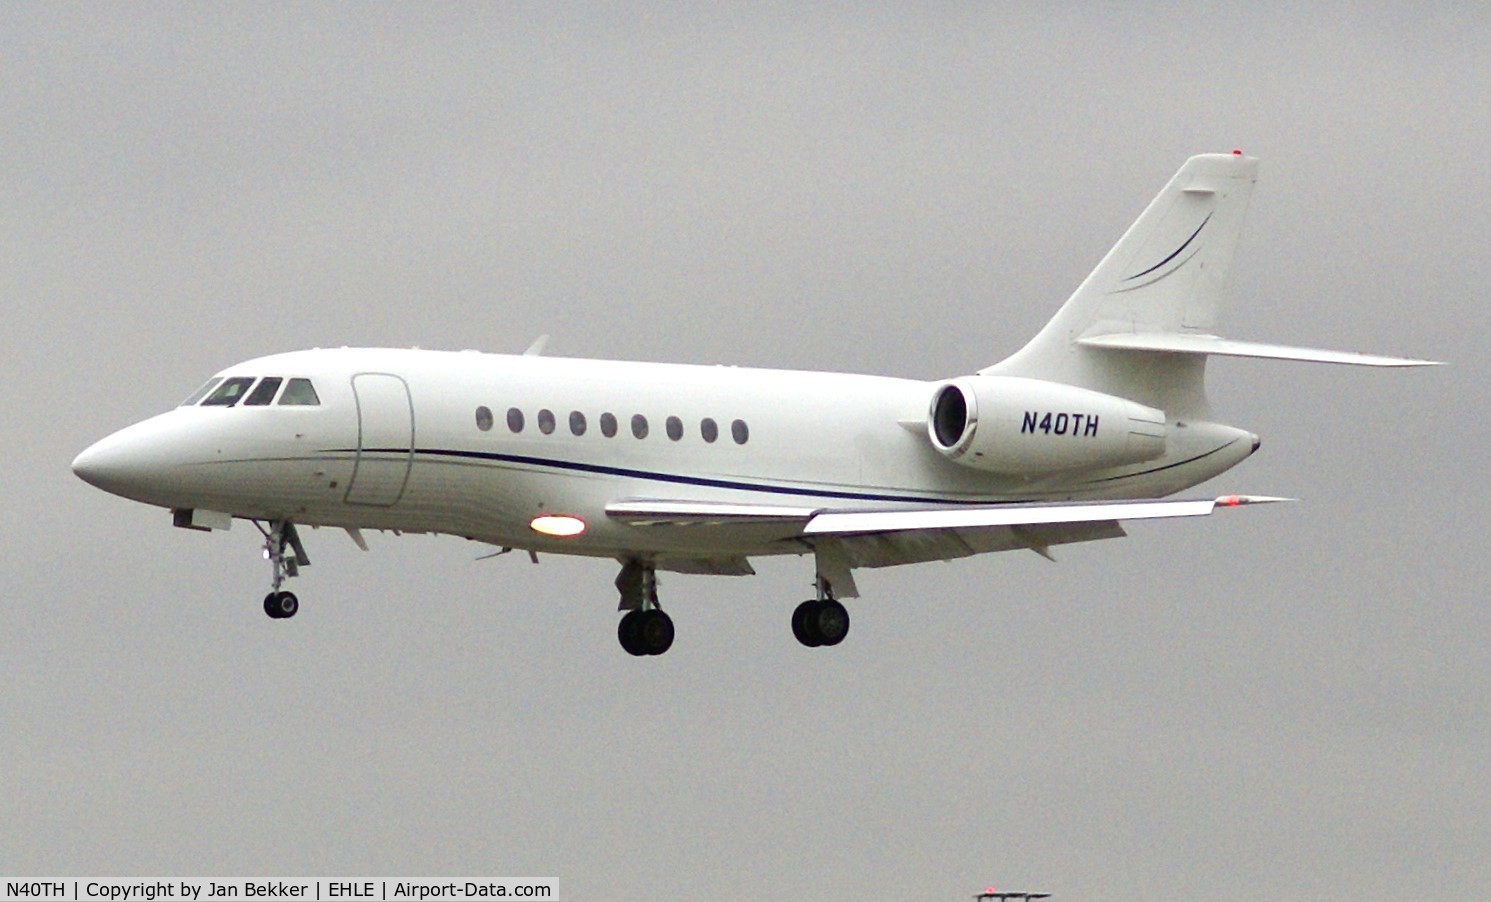 N40TH, 2003 Dassault Falcon 2000EX C/N 007, Lelystad Airport. Arriving from Malta